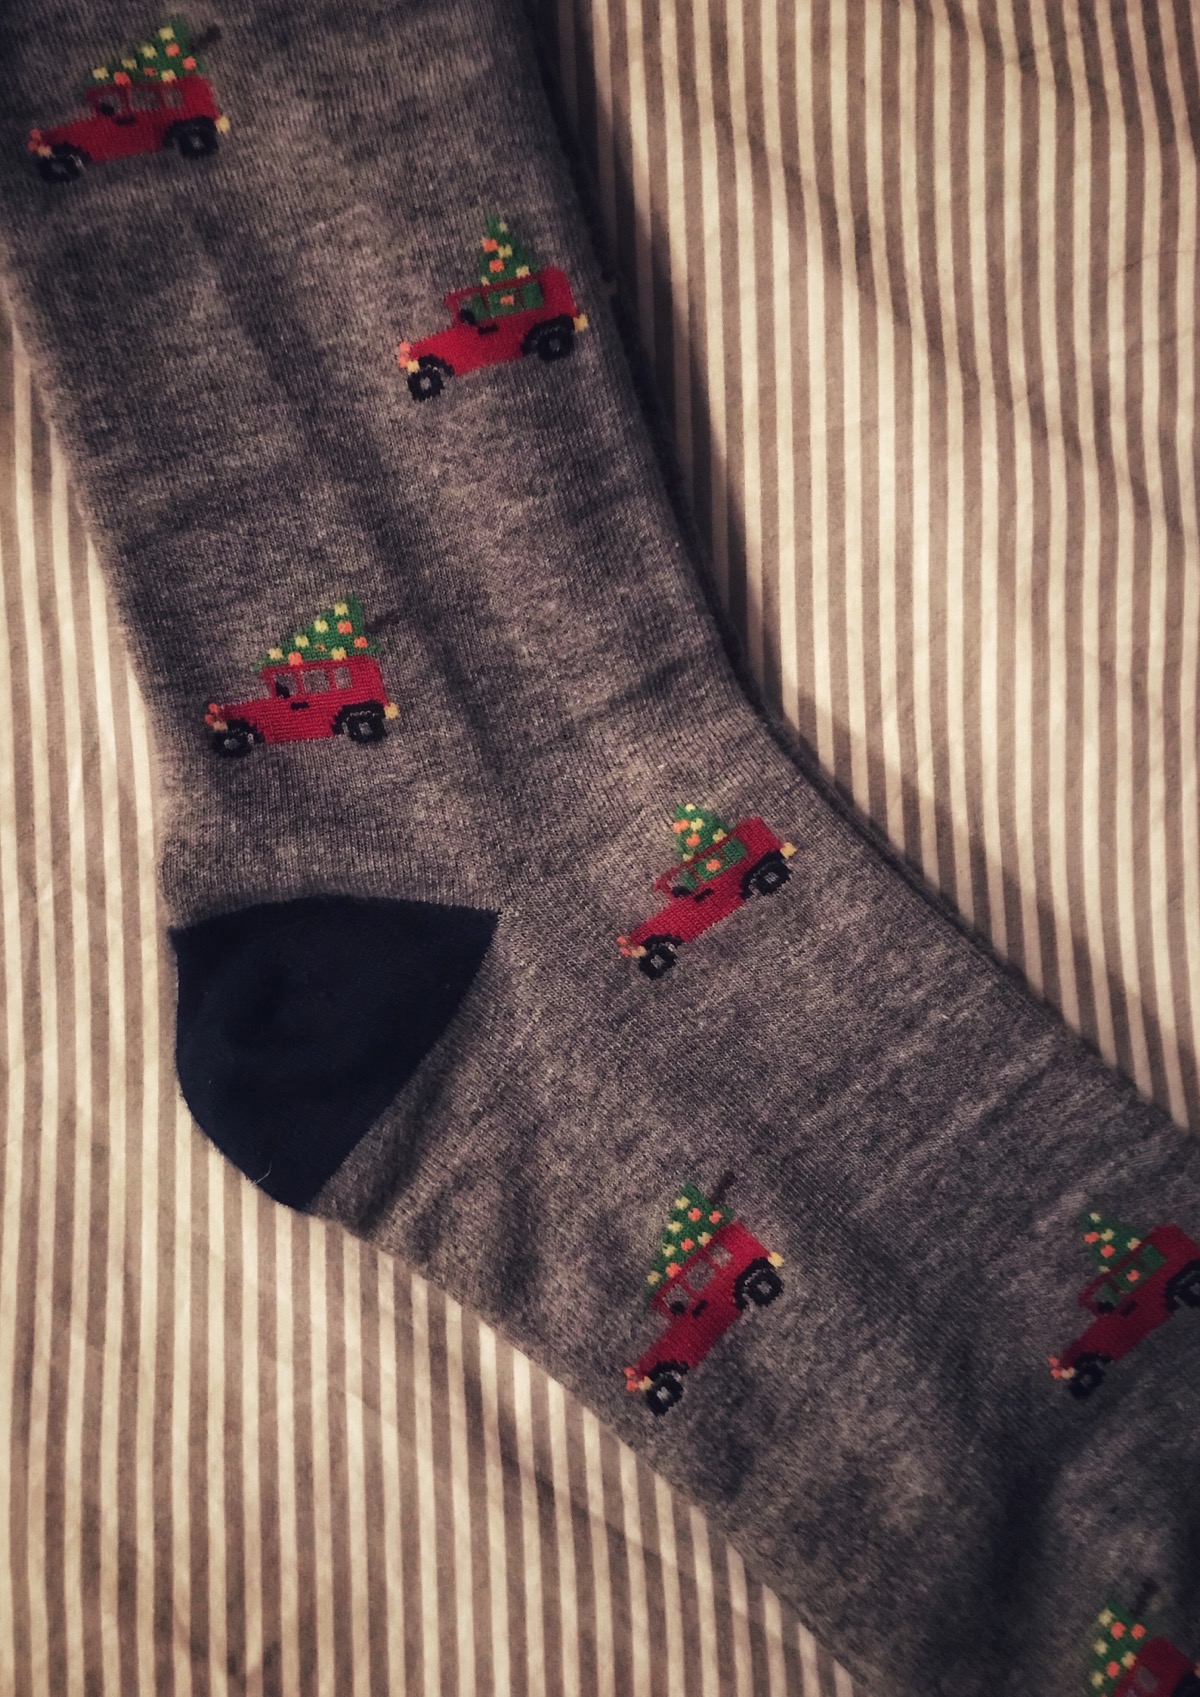 Socks with festive prints